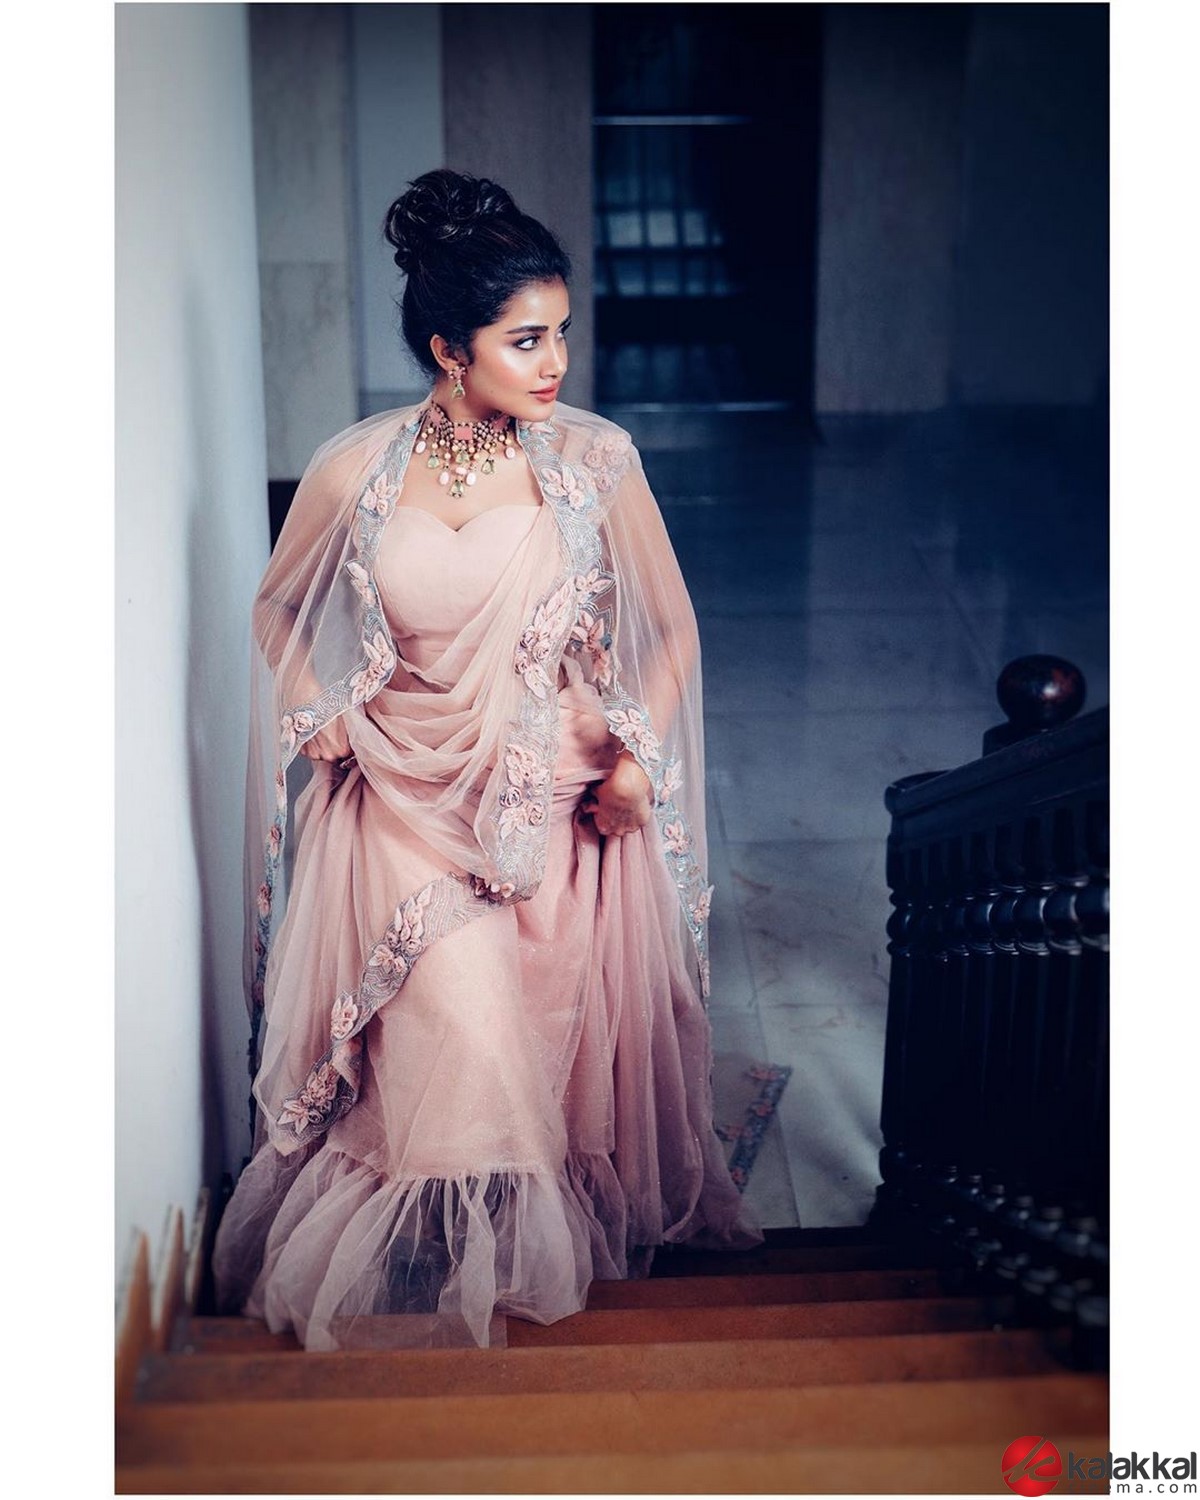 Anupama Parameswaran in Flamingo-colored outfit | Page 2 | Telugu Cinema